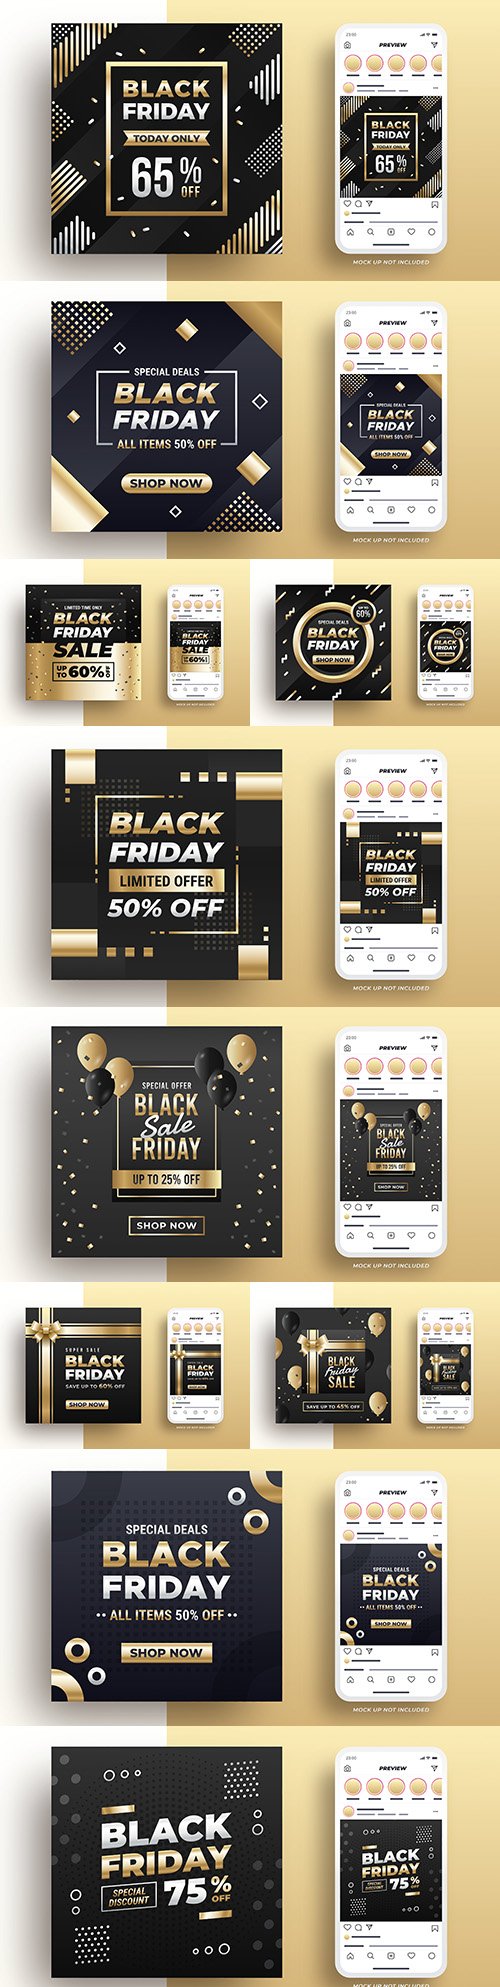 Black Friday selling banner on social media design gold